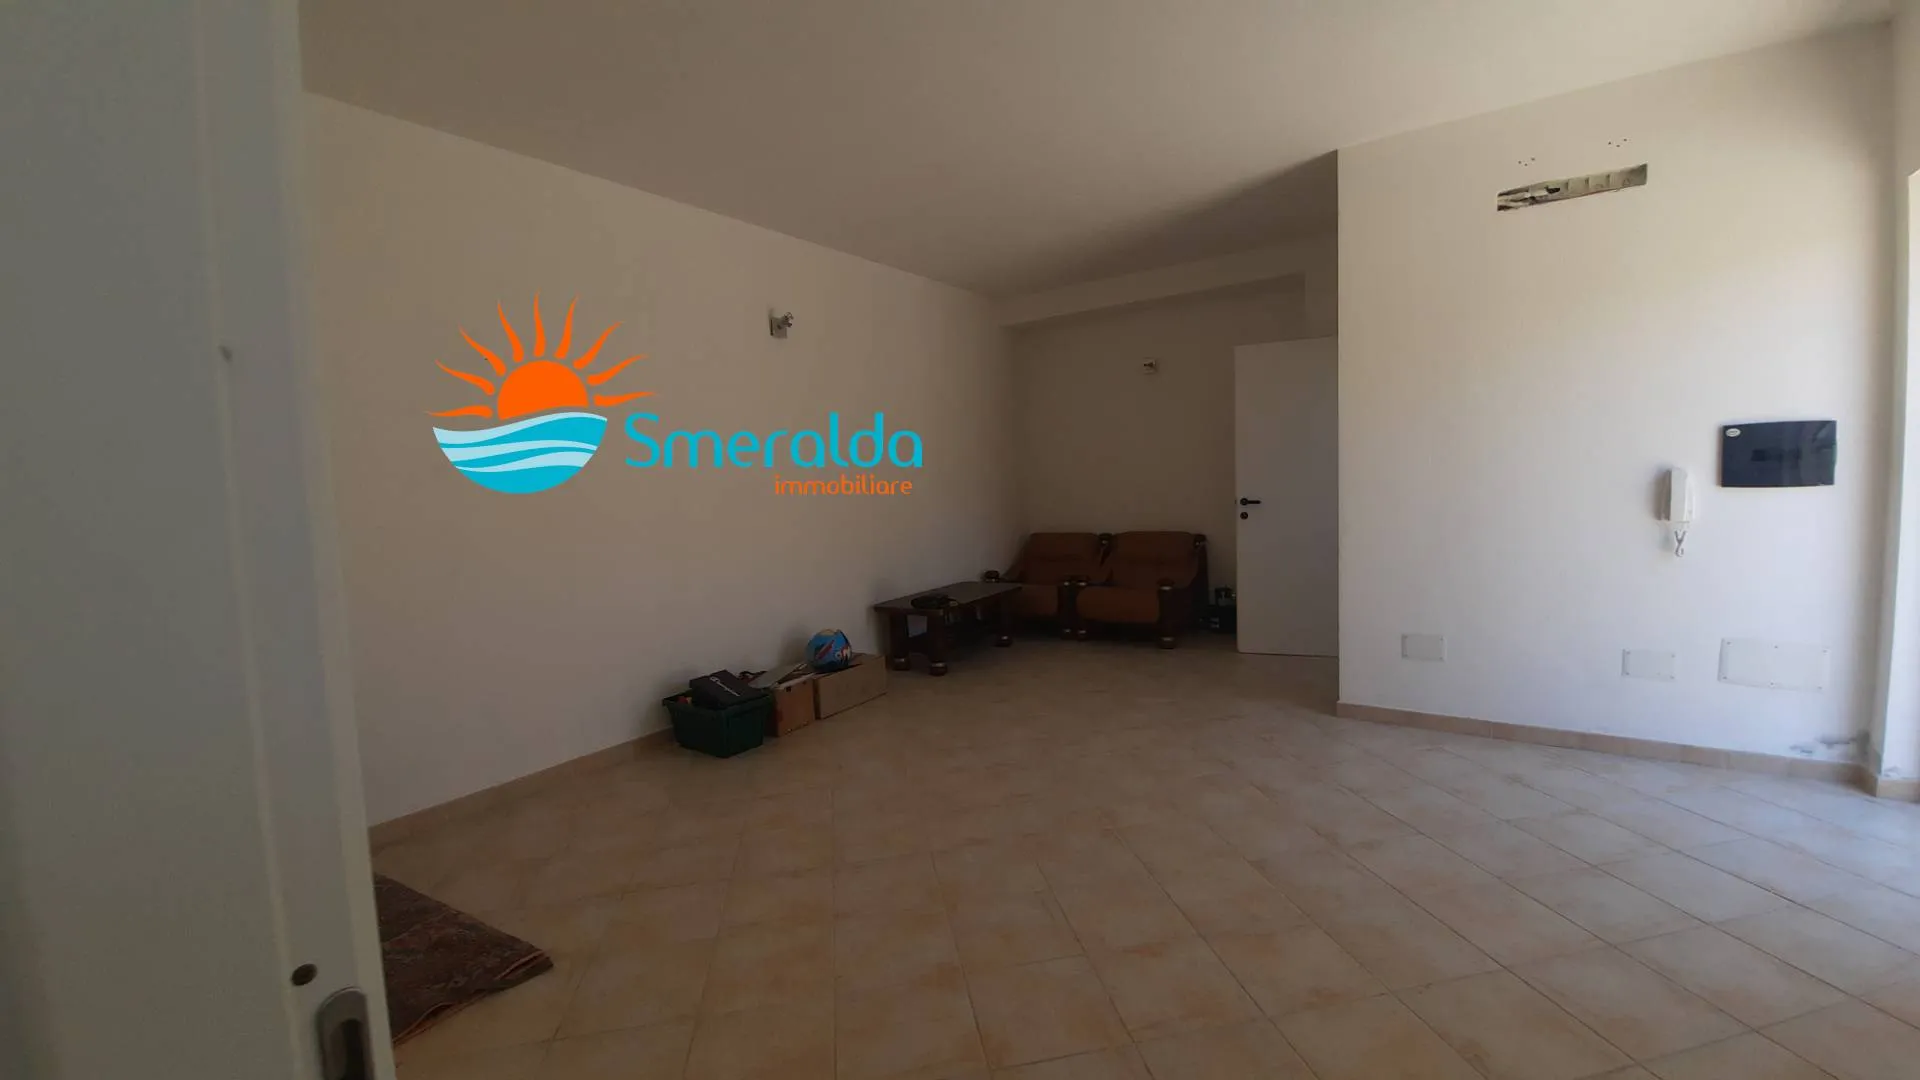 Immagine per Appartamento in vendita a Trinità d'Agultu e Vignola Via Petra Bianca angolo vi Asinara